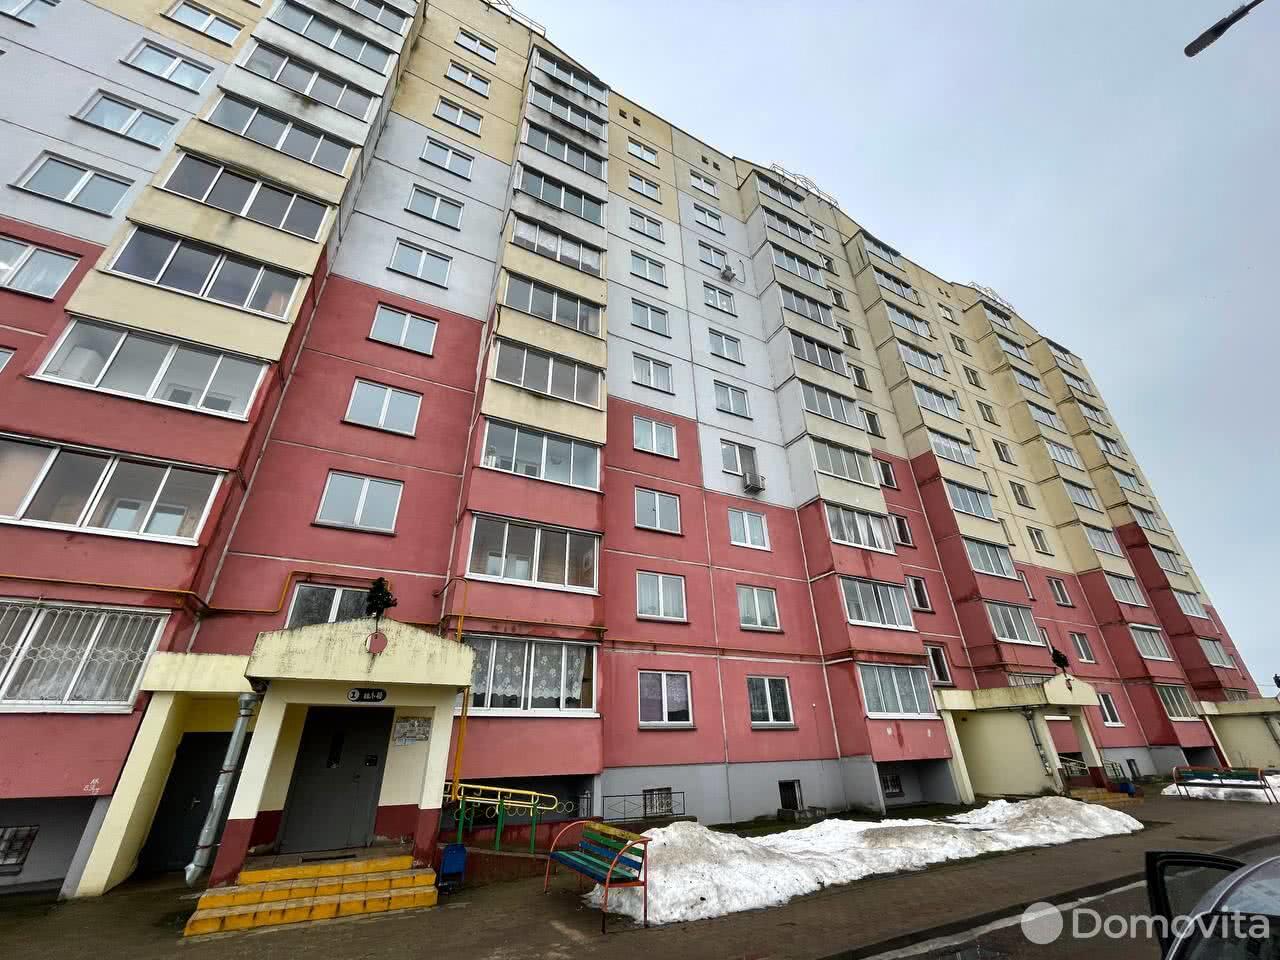 квартира, Витебск, пр-т Фрунзе, д. 98, стоимость продажи 101 379 р.